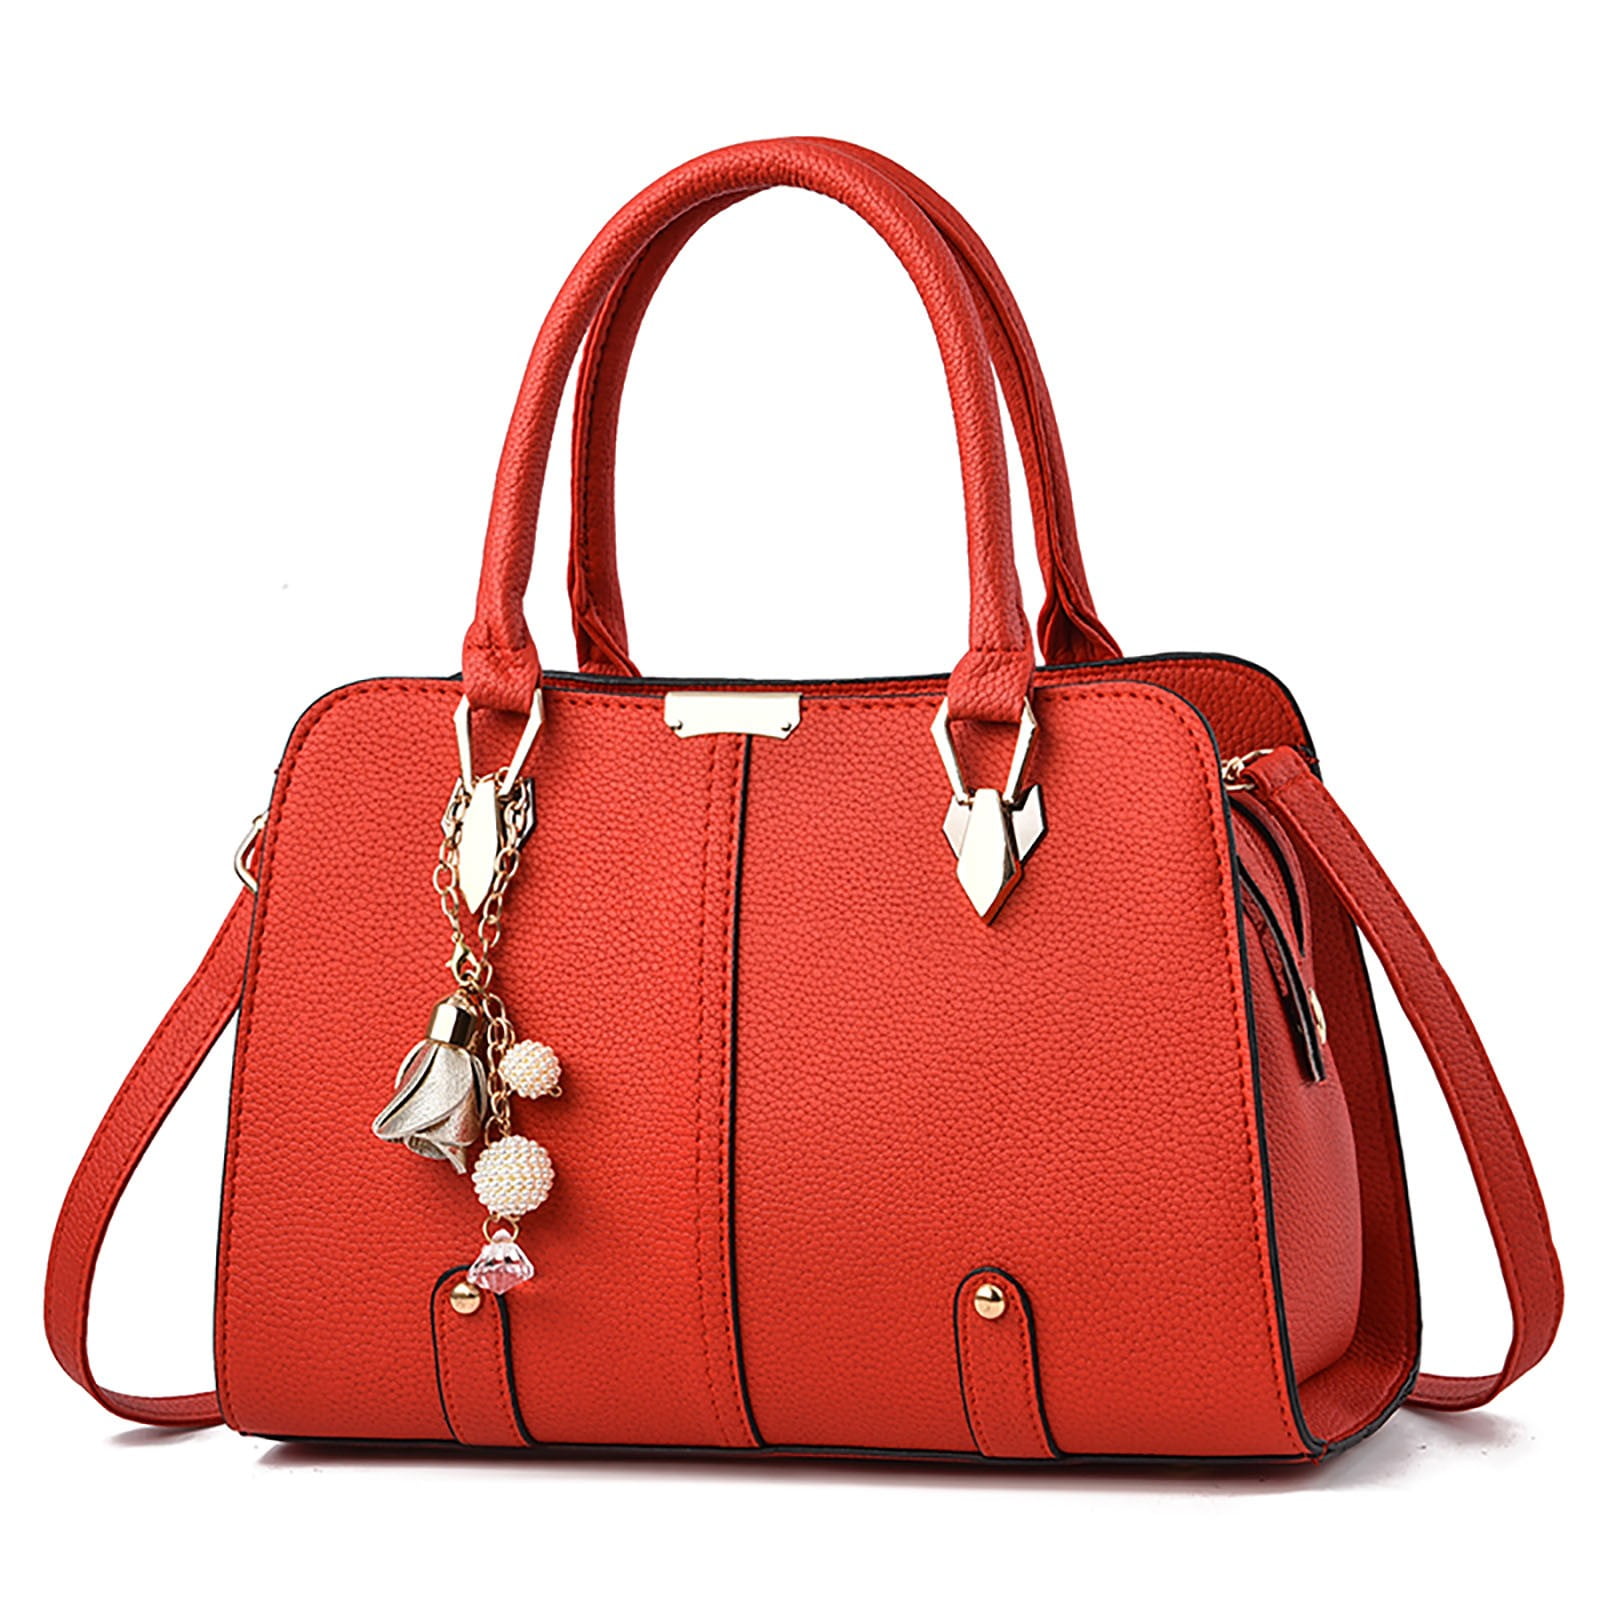 Luxury Women's Handbags and Purses